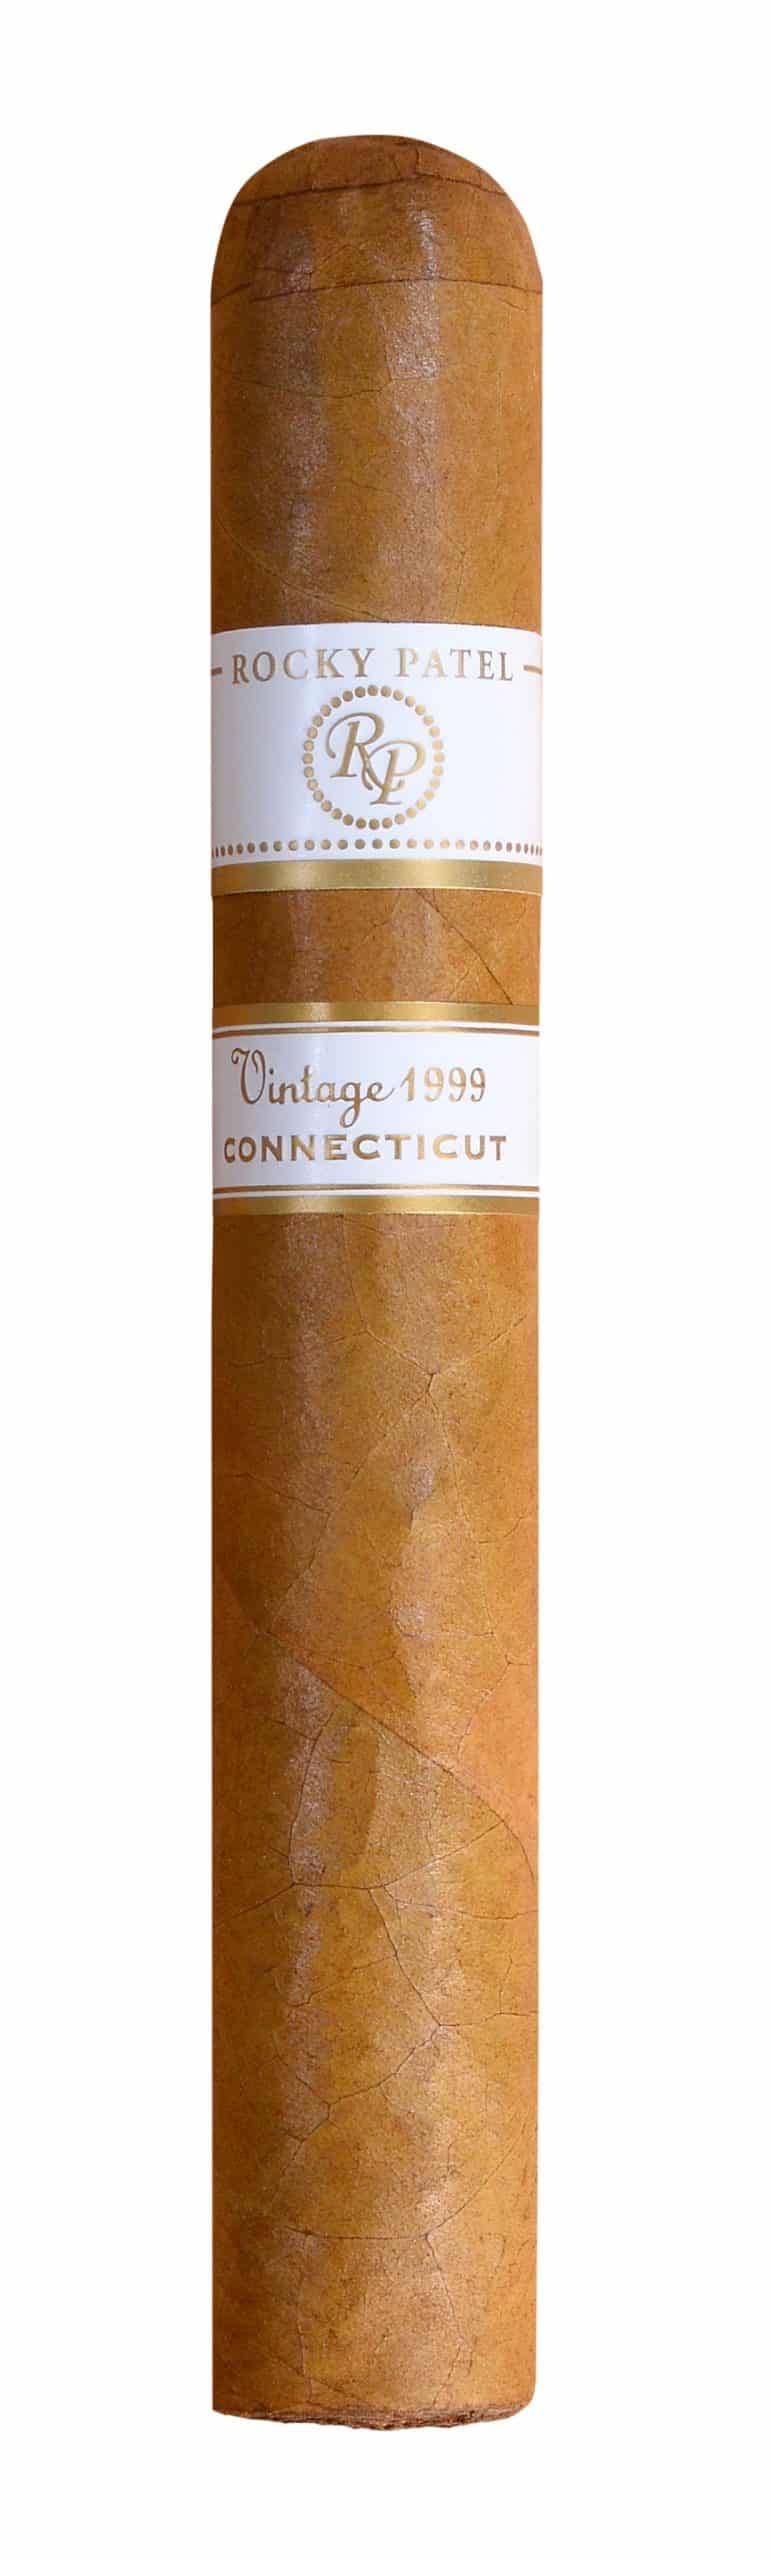 rocky patel vintage 1999 robusto single cigar